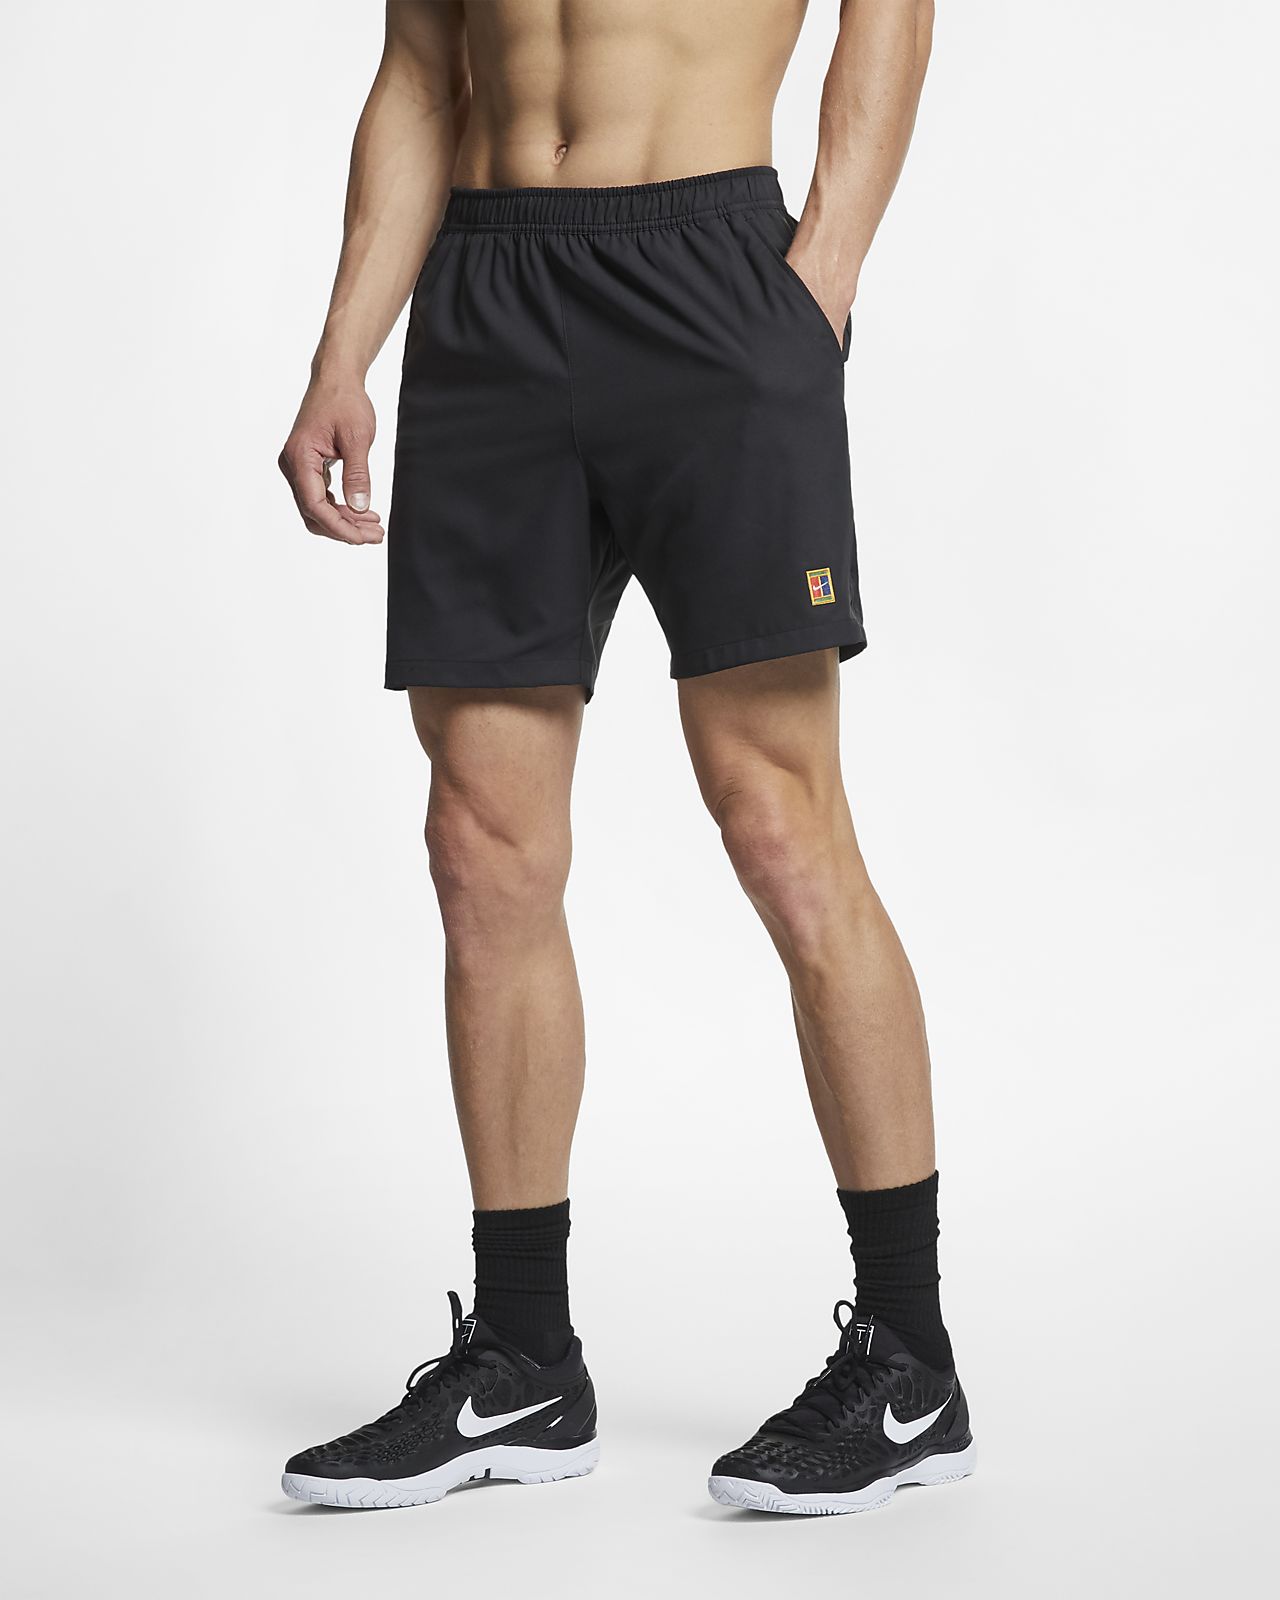 black nike tennis shorts Sale,up to 65 